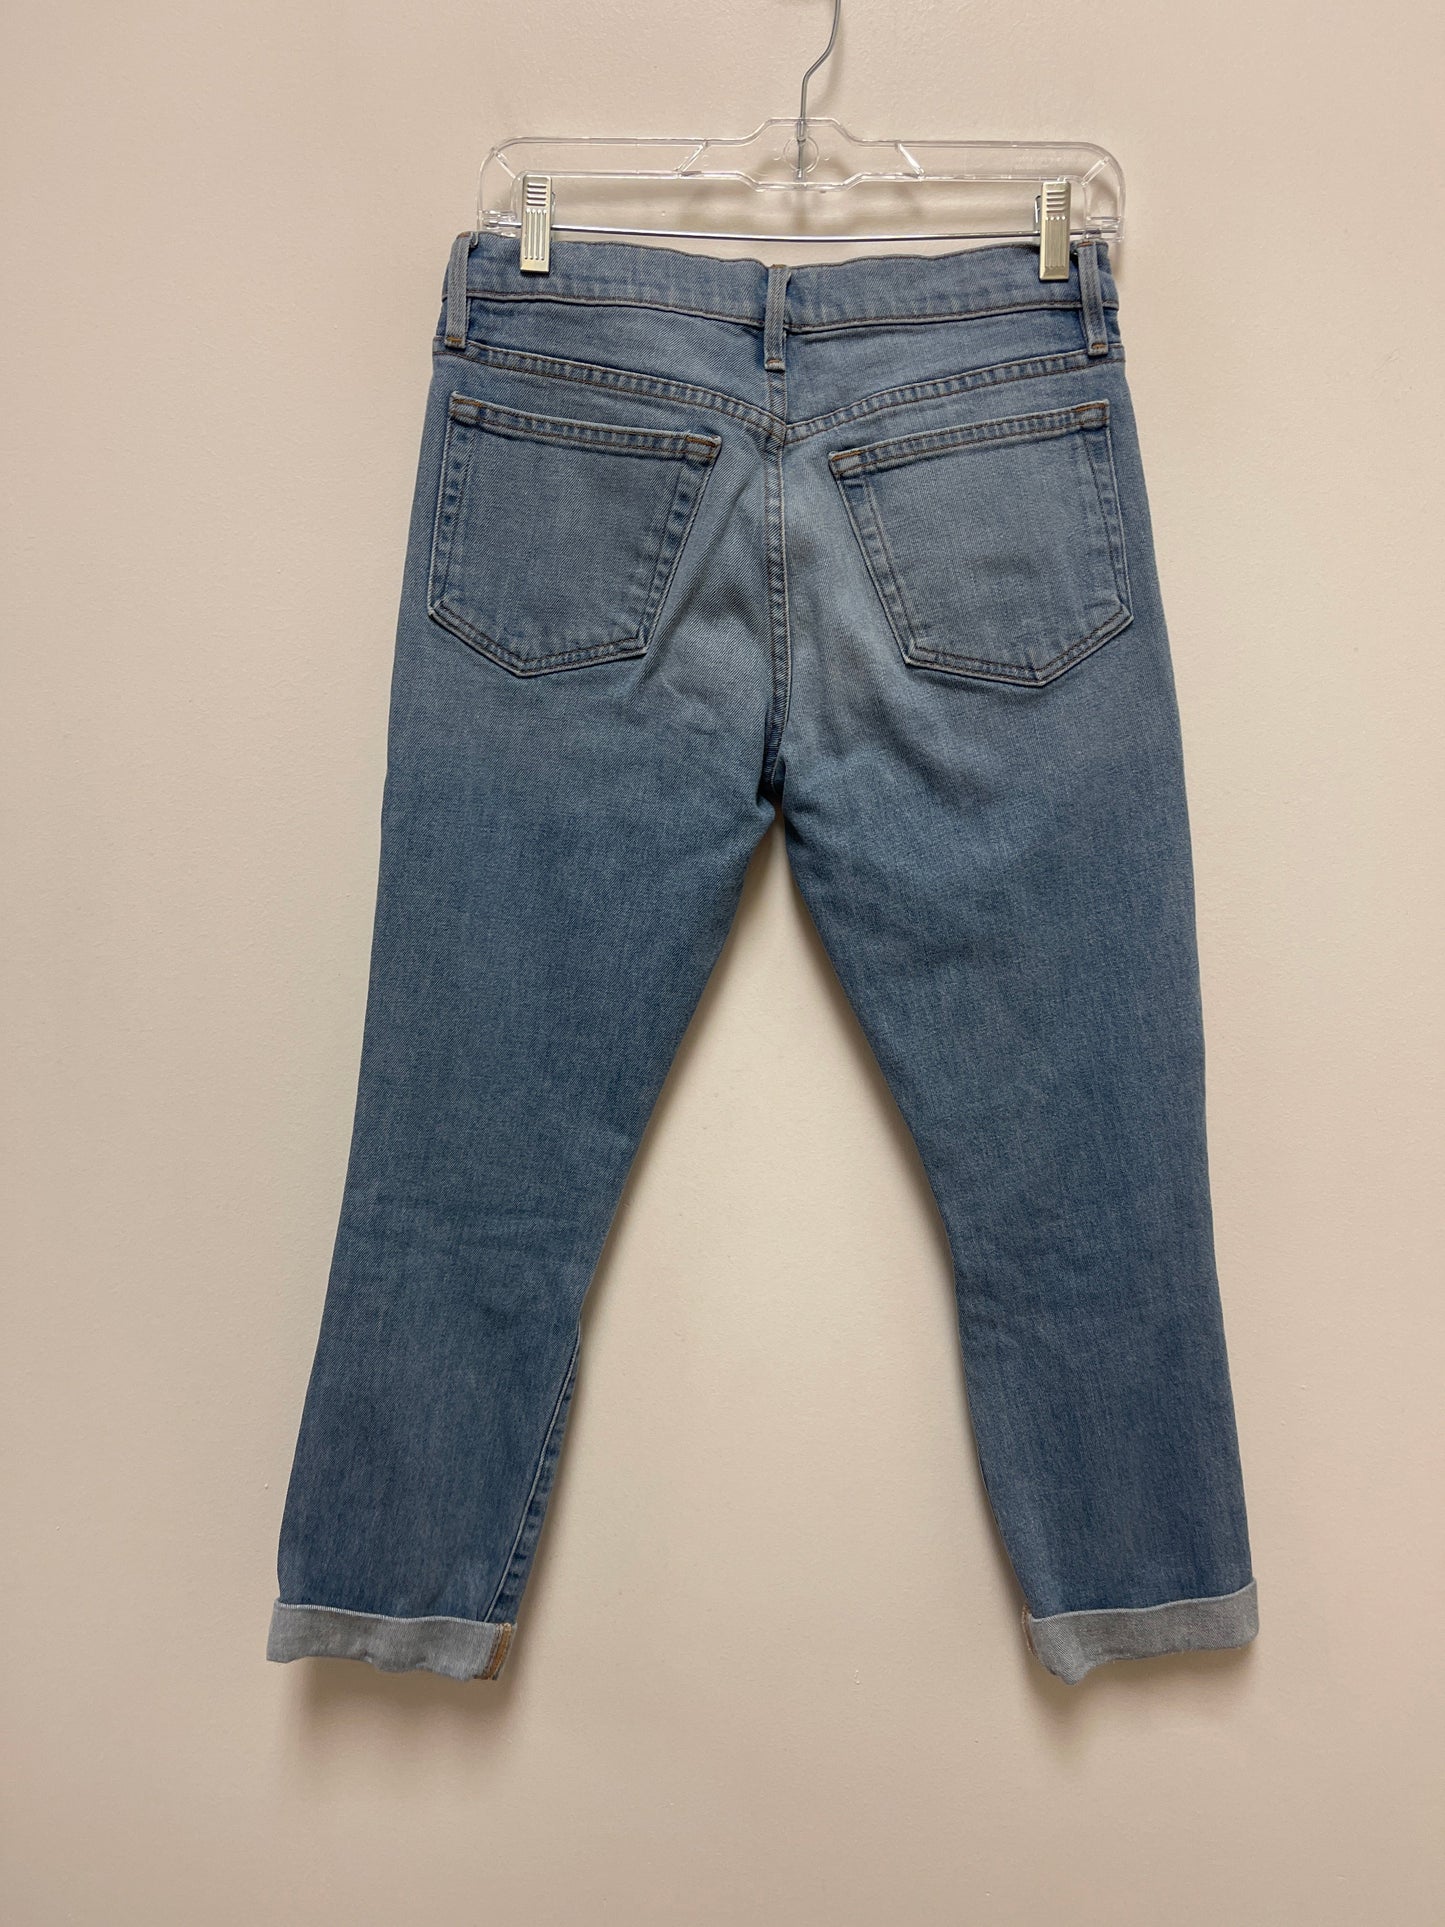 Jeans Skinny By Frame  Size: 2